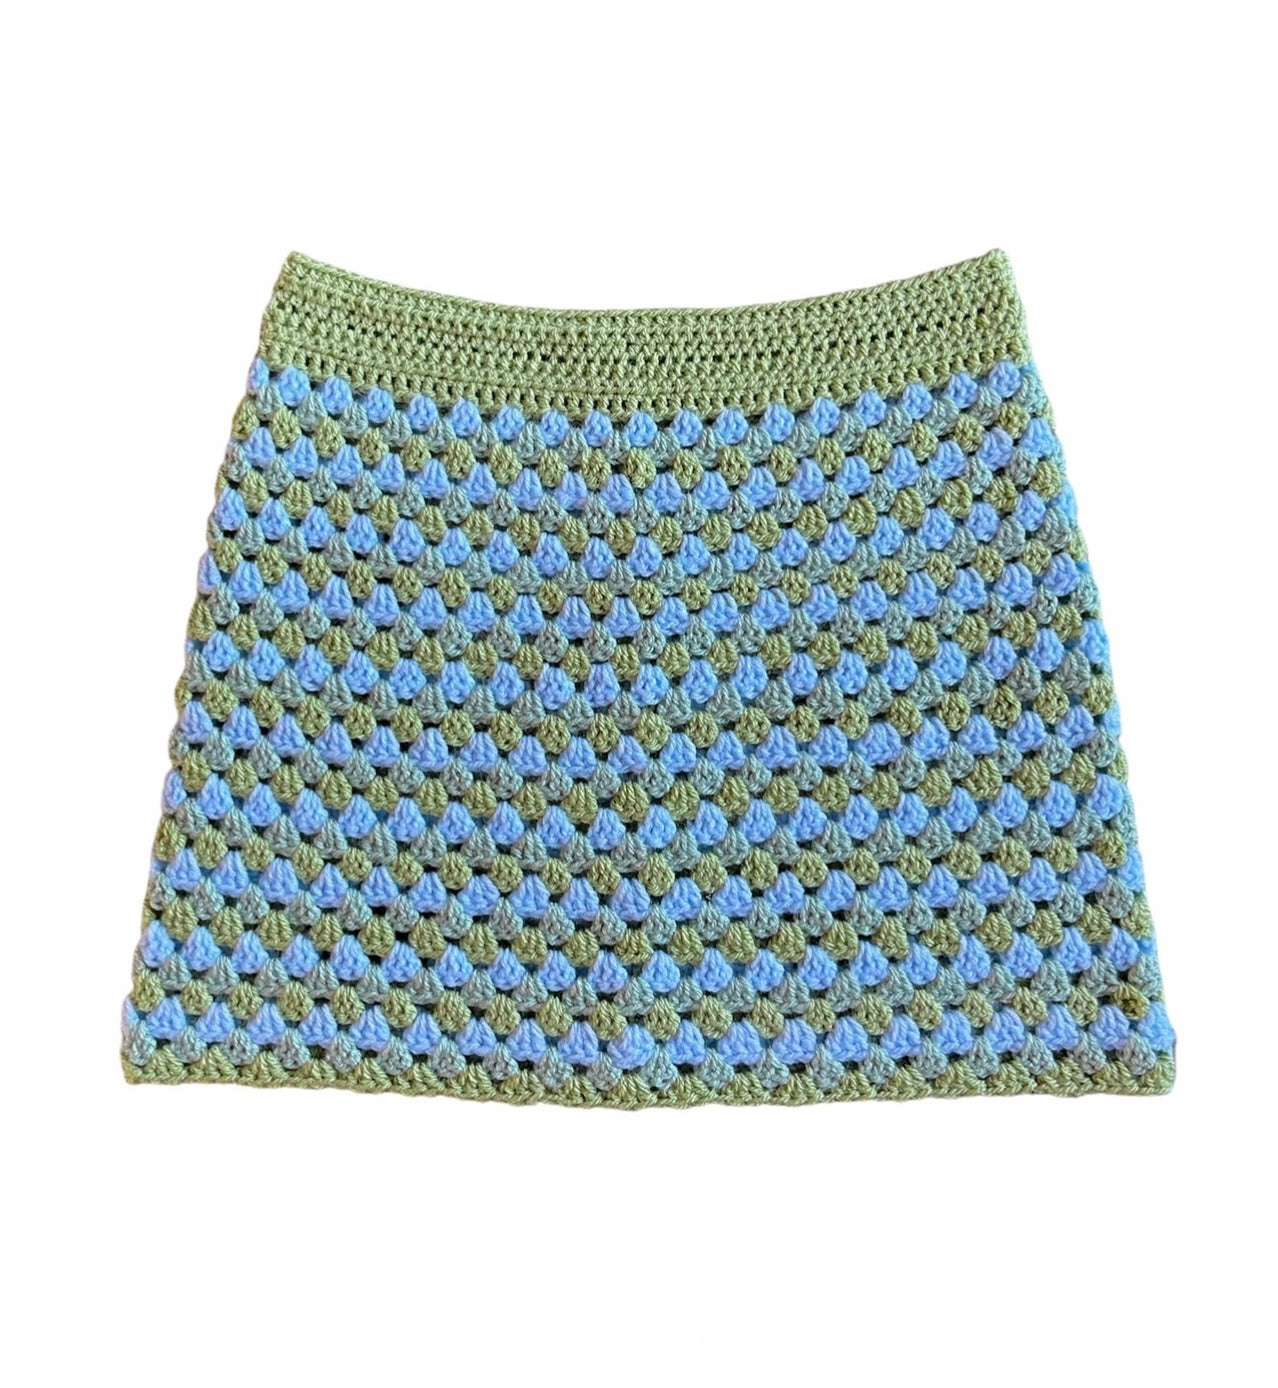 Handmade retro crochet mini skirt in baby blue and green